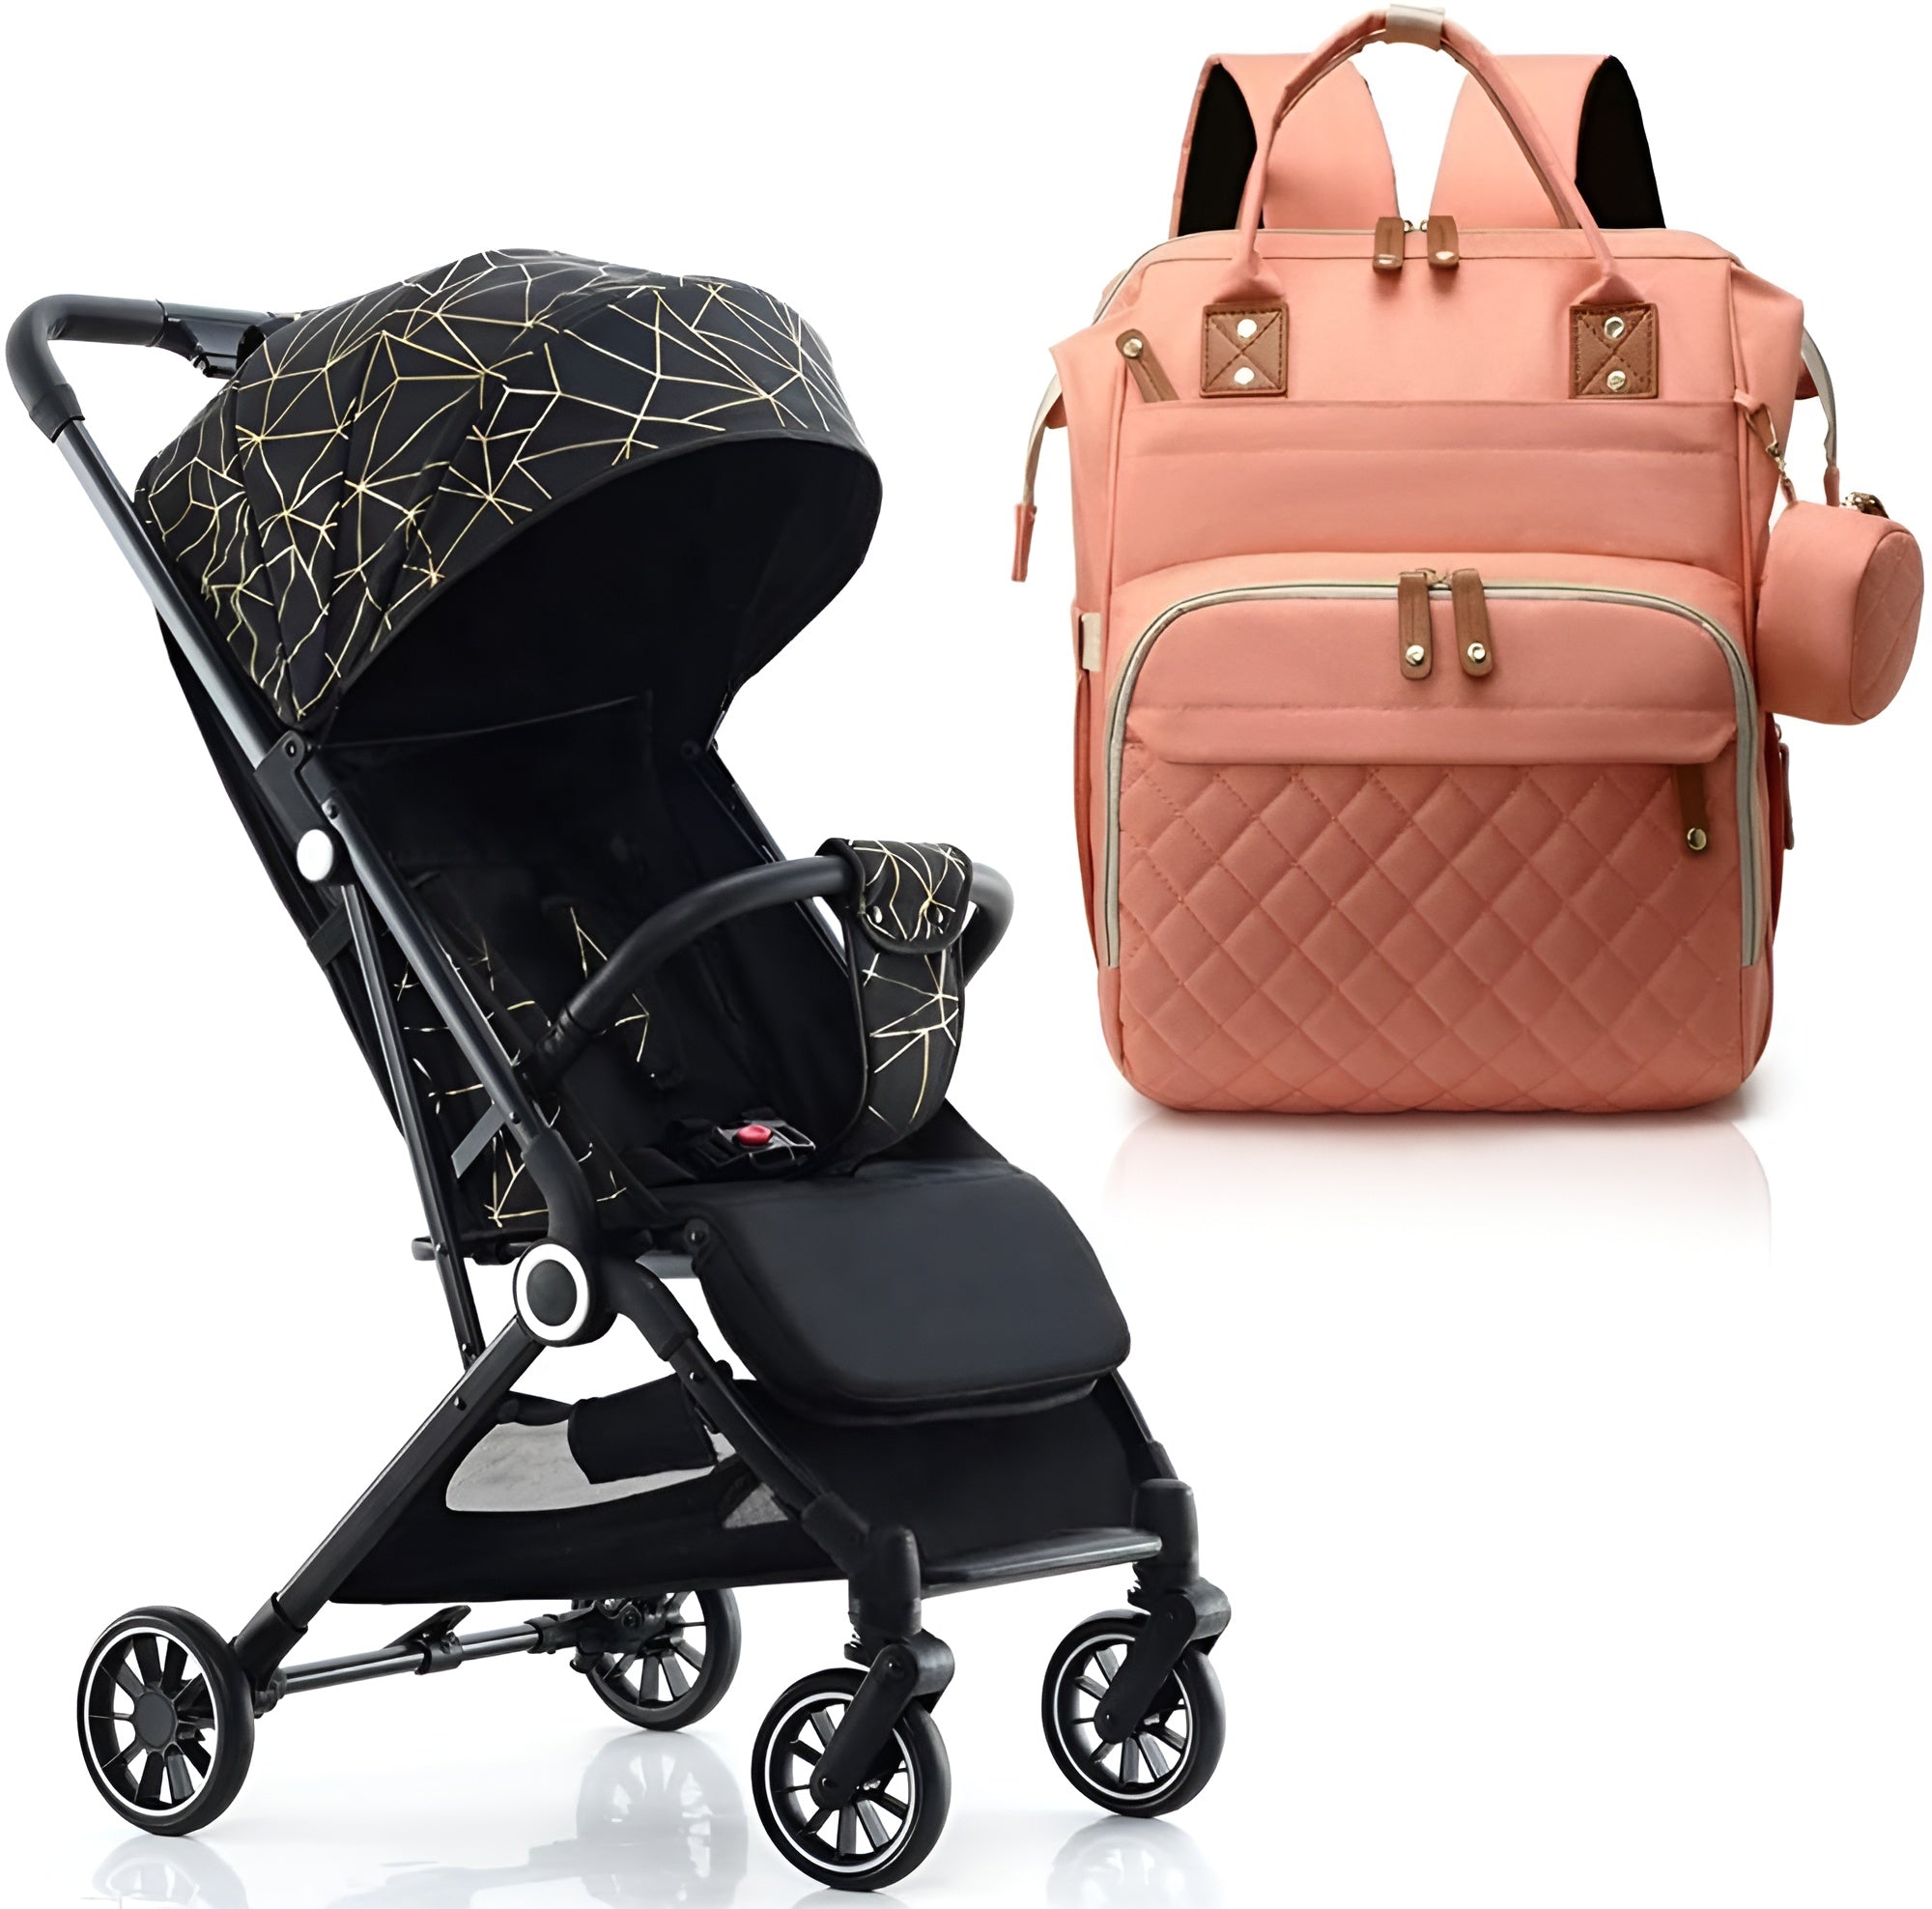 Baby Stroller and Baby Bolsas Maternity bag Pack Trend Female Diaper Backpack 2 in 1